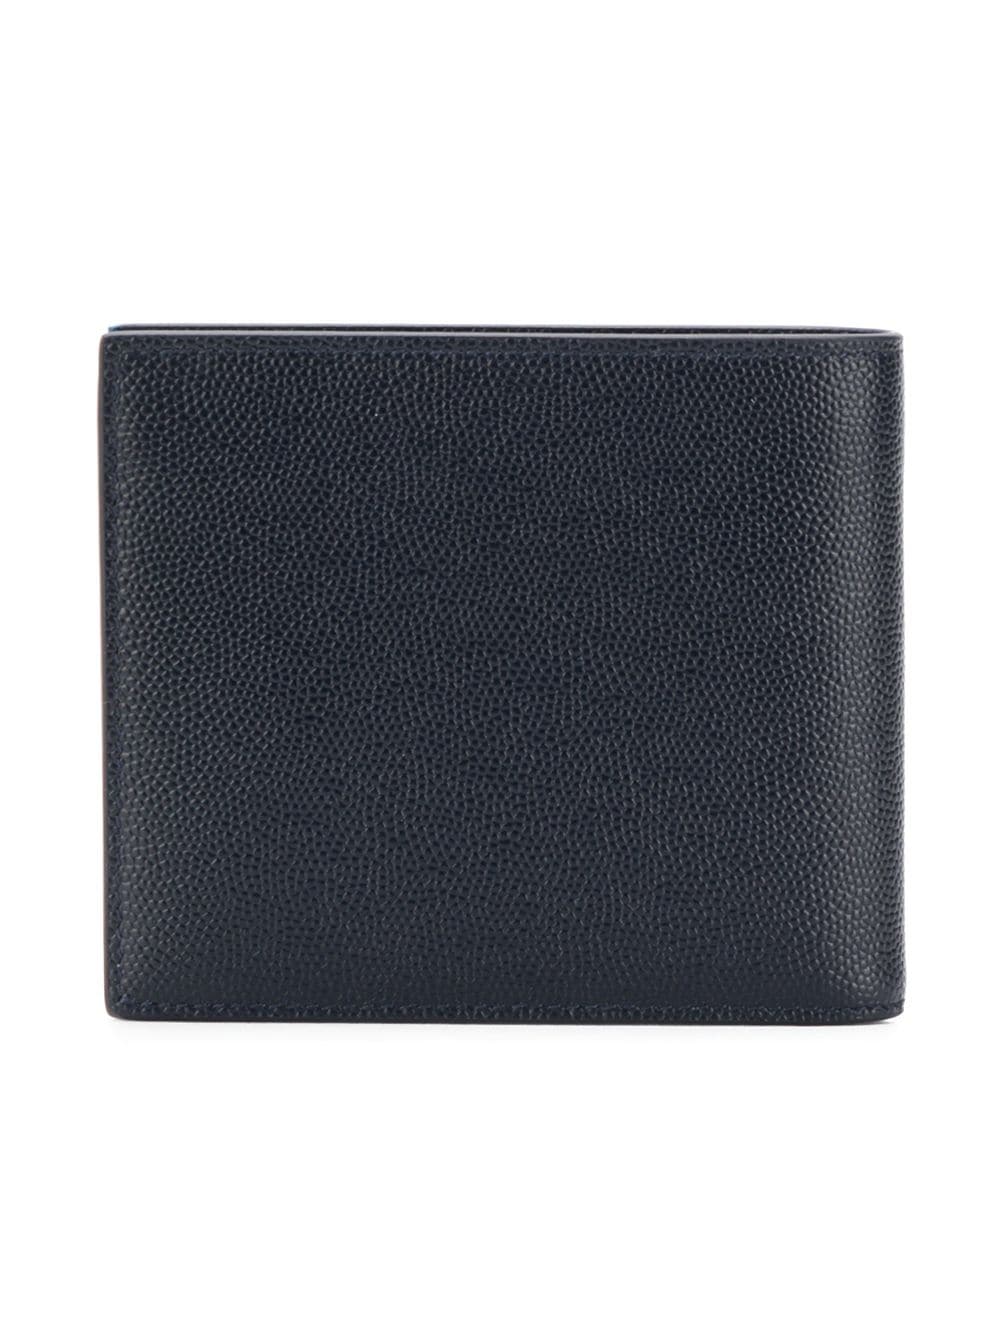 Saint Laurent textured bi-fold wallet